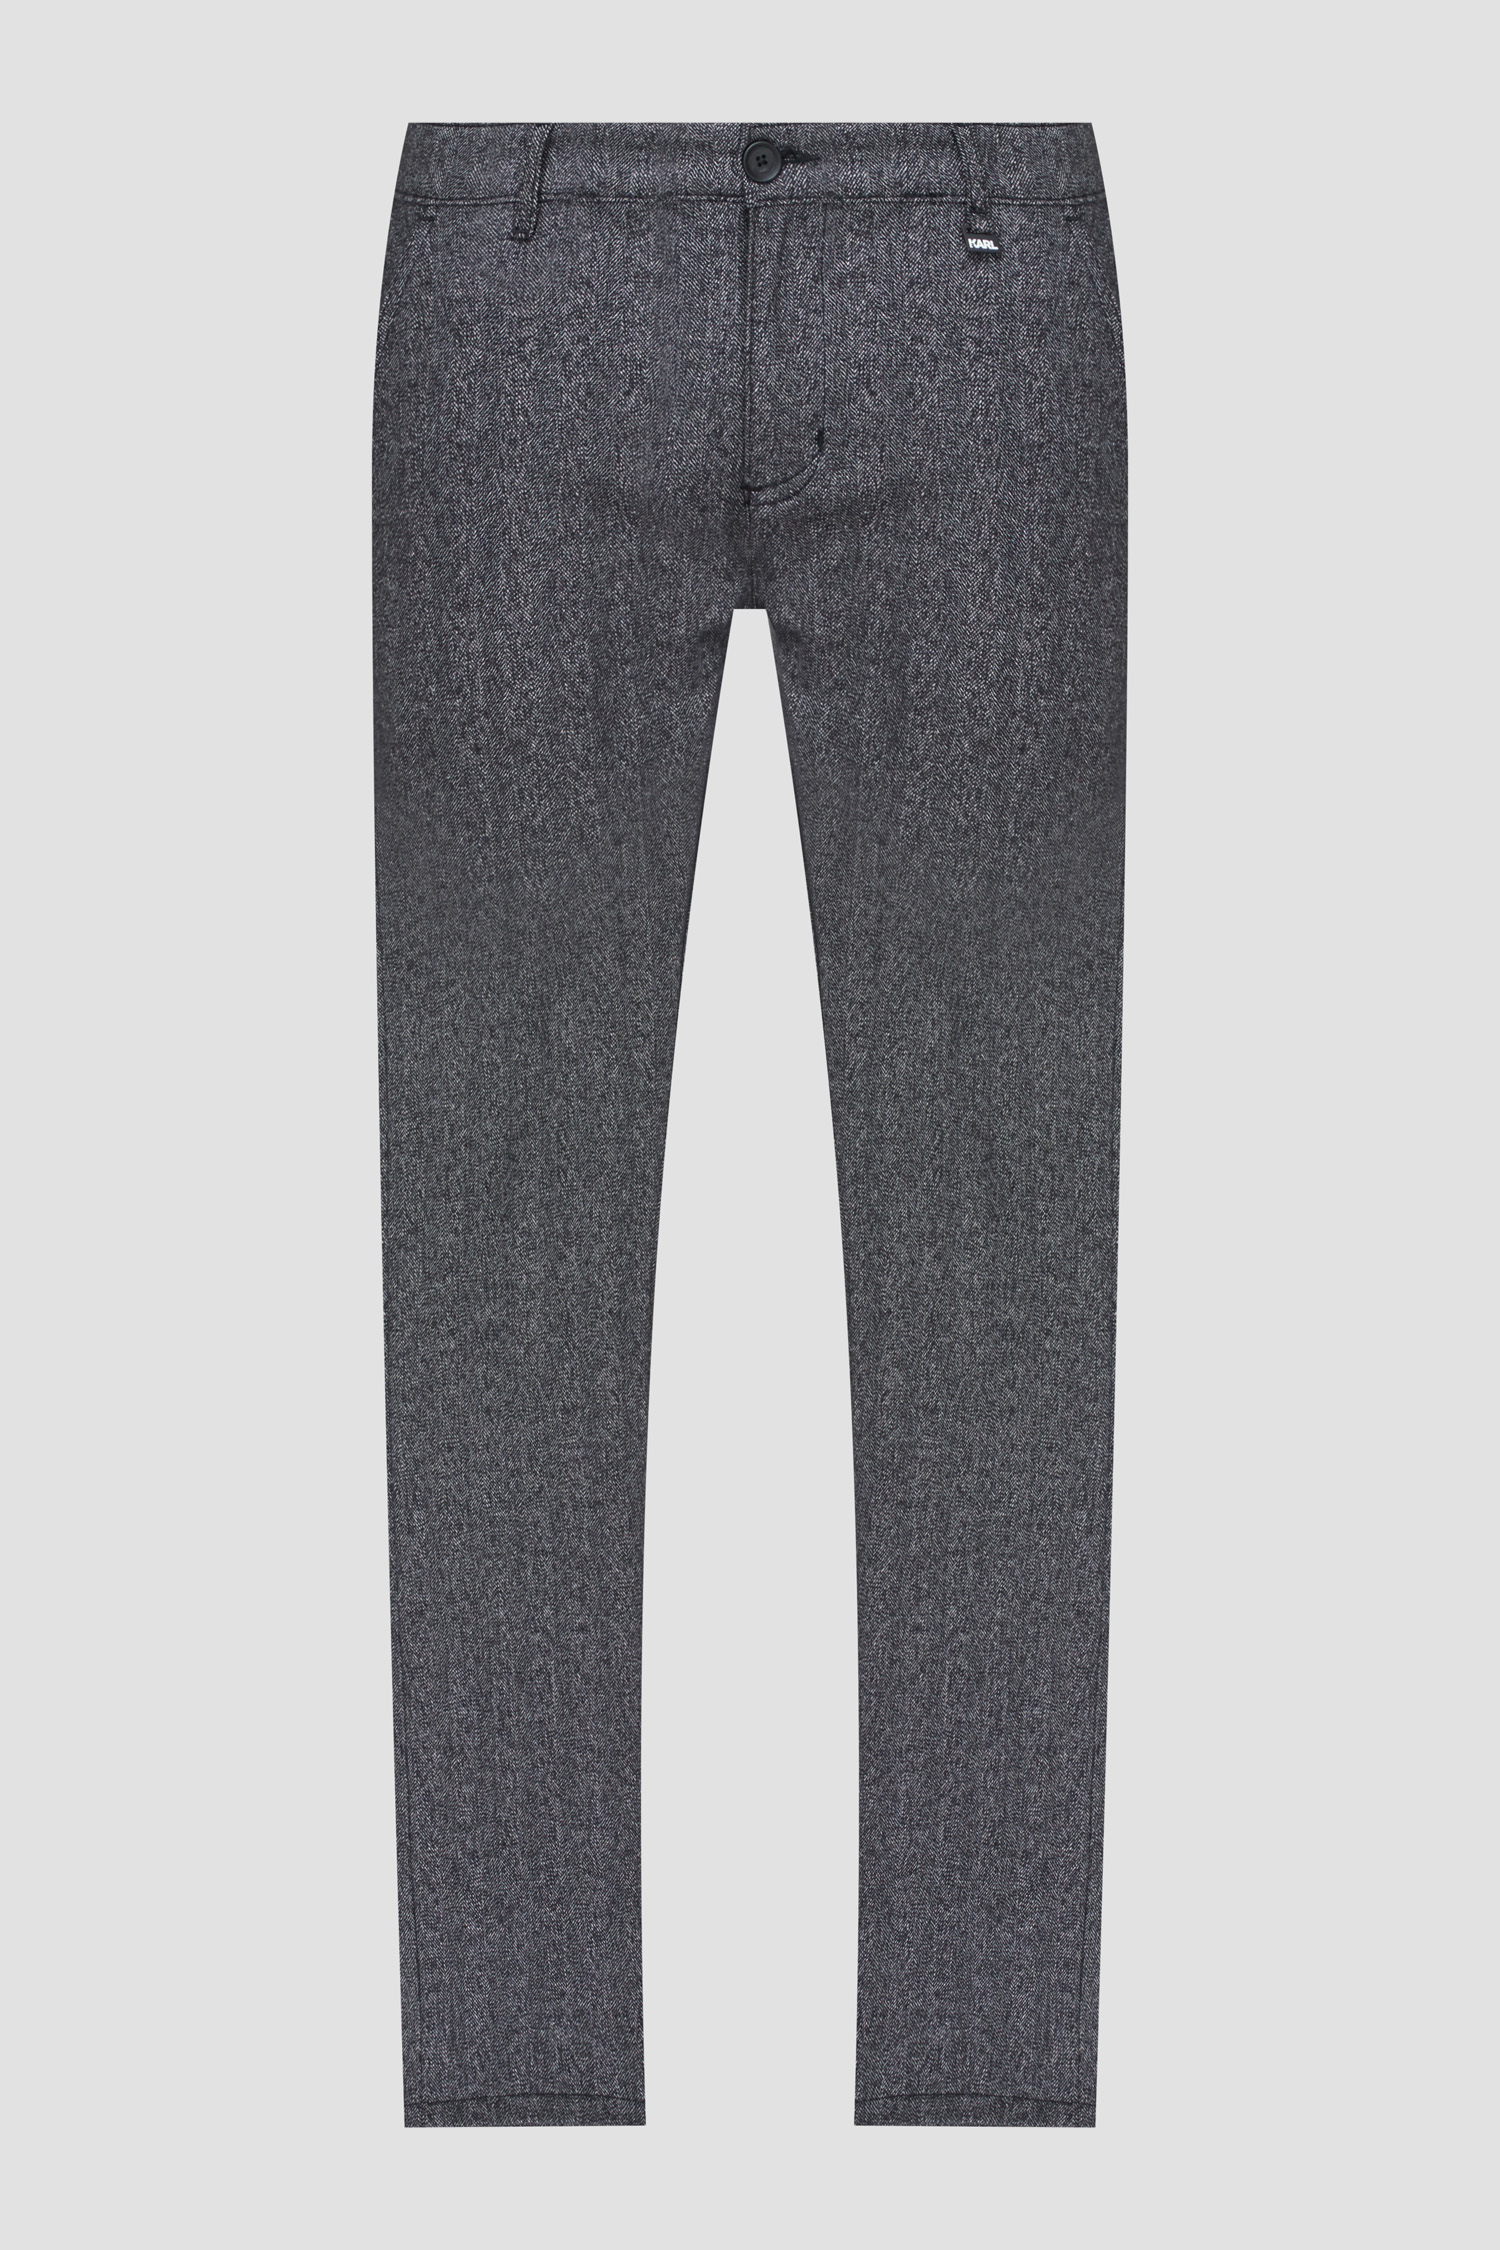 Мужские темно-серые брюки Karl Lagerfeld 534806.255835;991